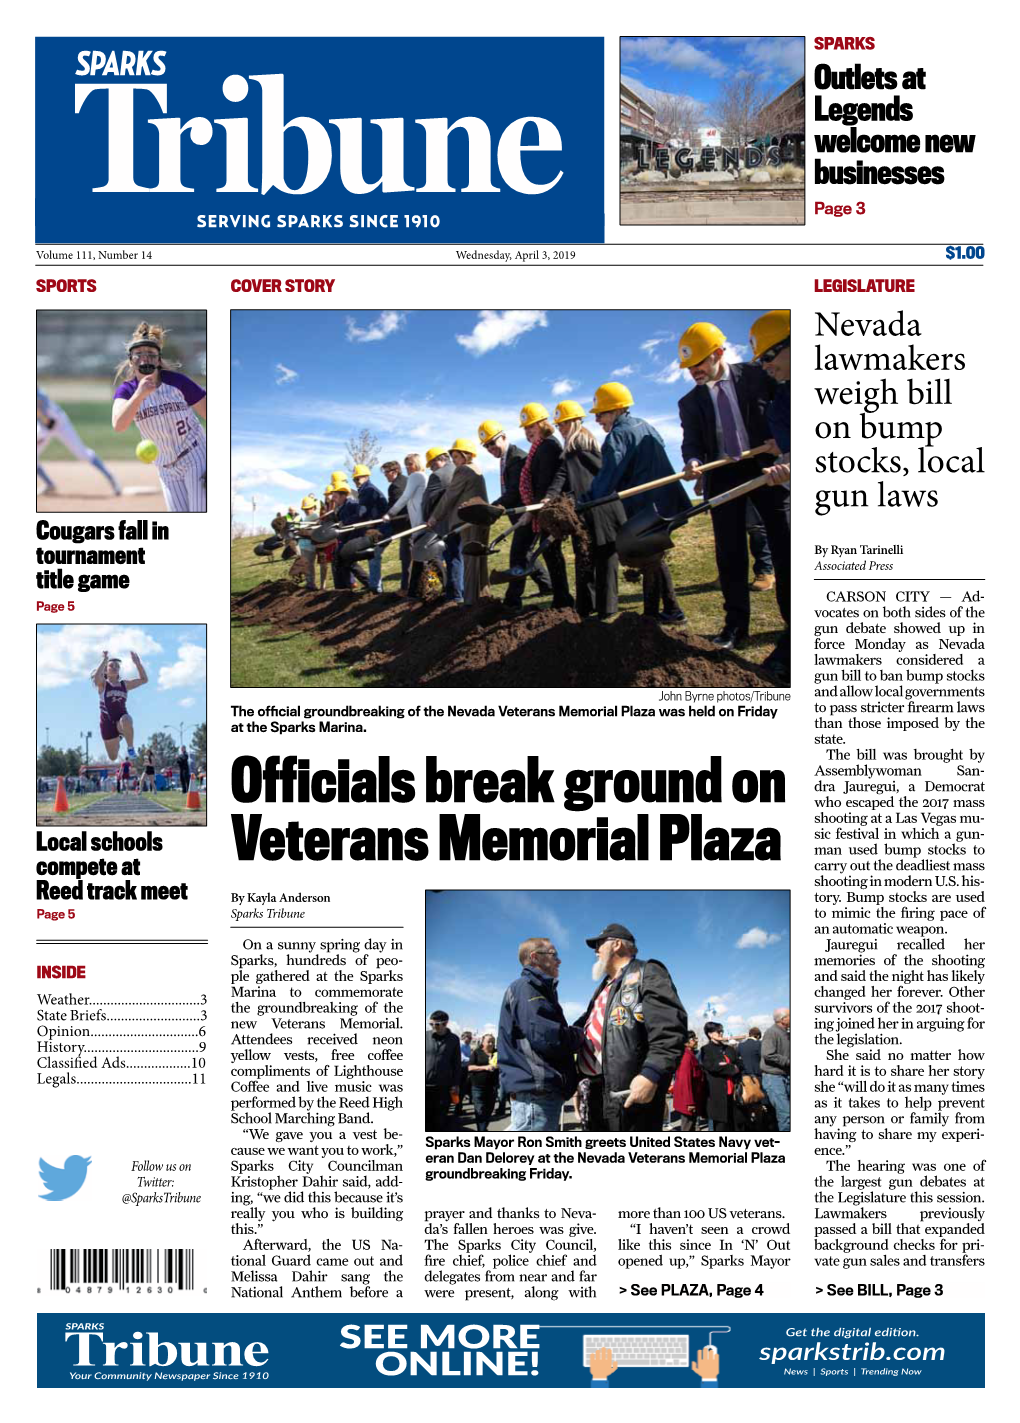 Officials Break Ground on Veterans Memorial Plaza